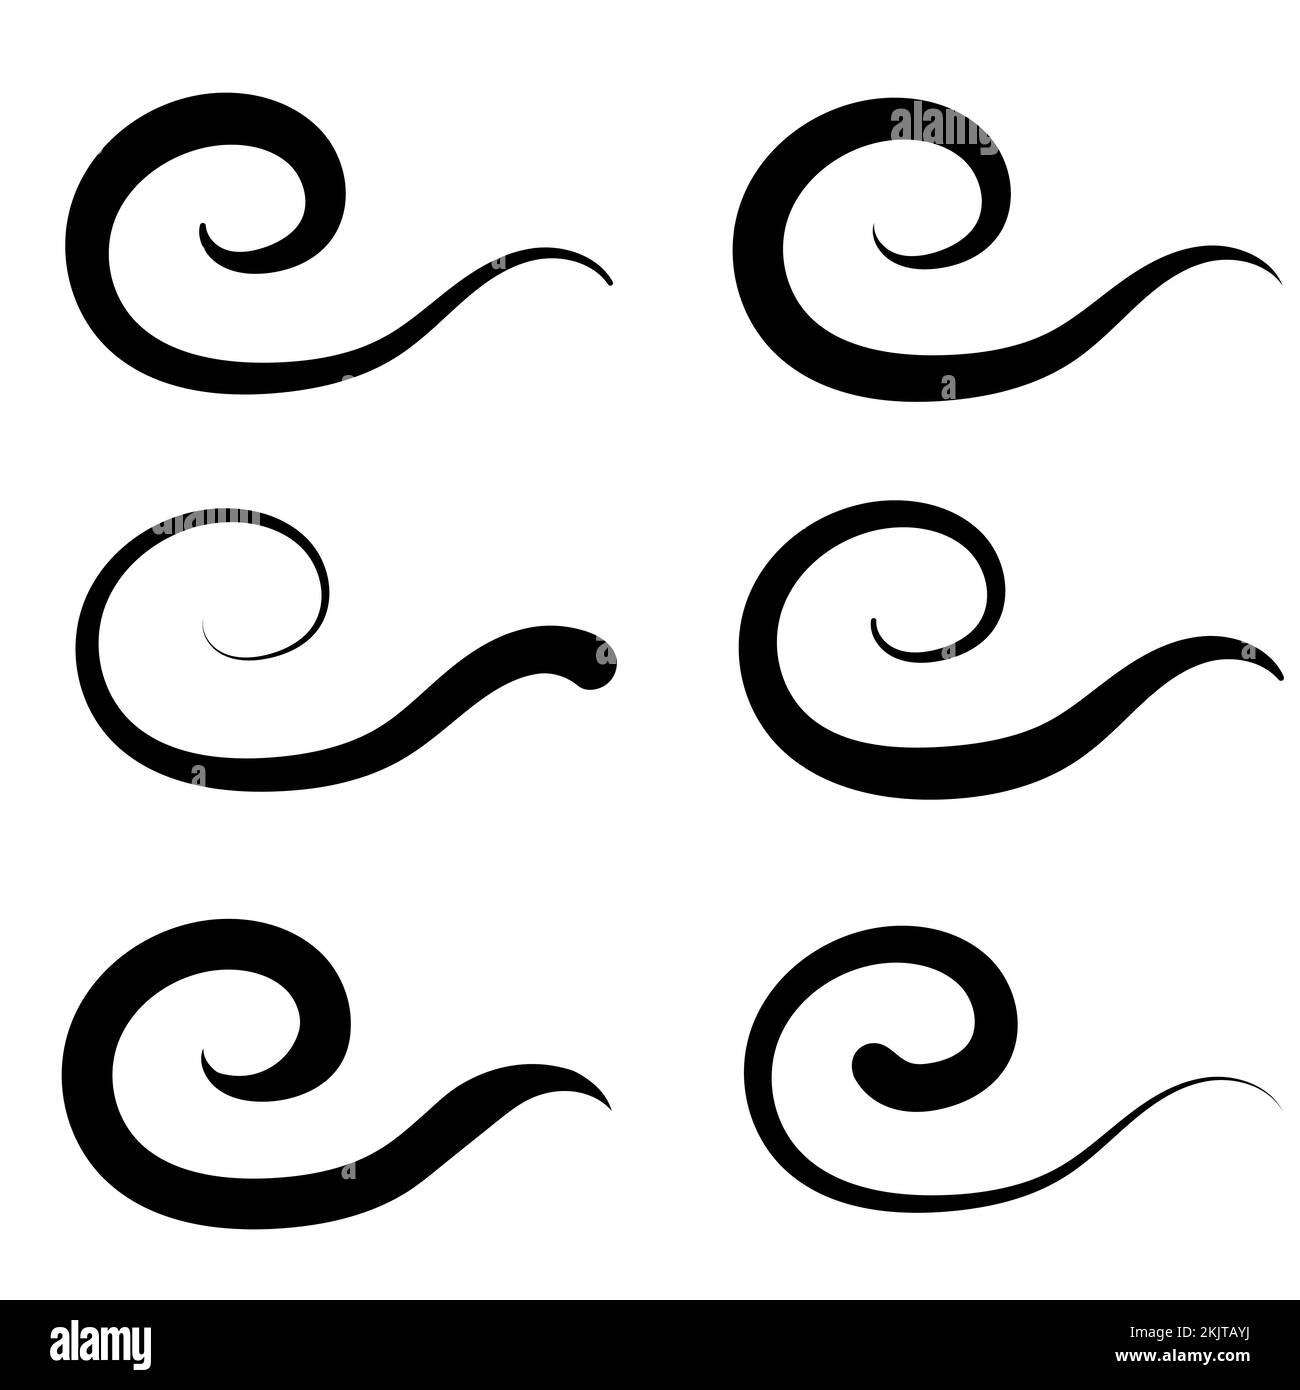 Swirl calligraphy element, flourish calligraphic line, design ornament script filigree Stock Vector